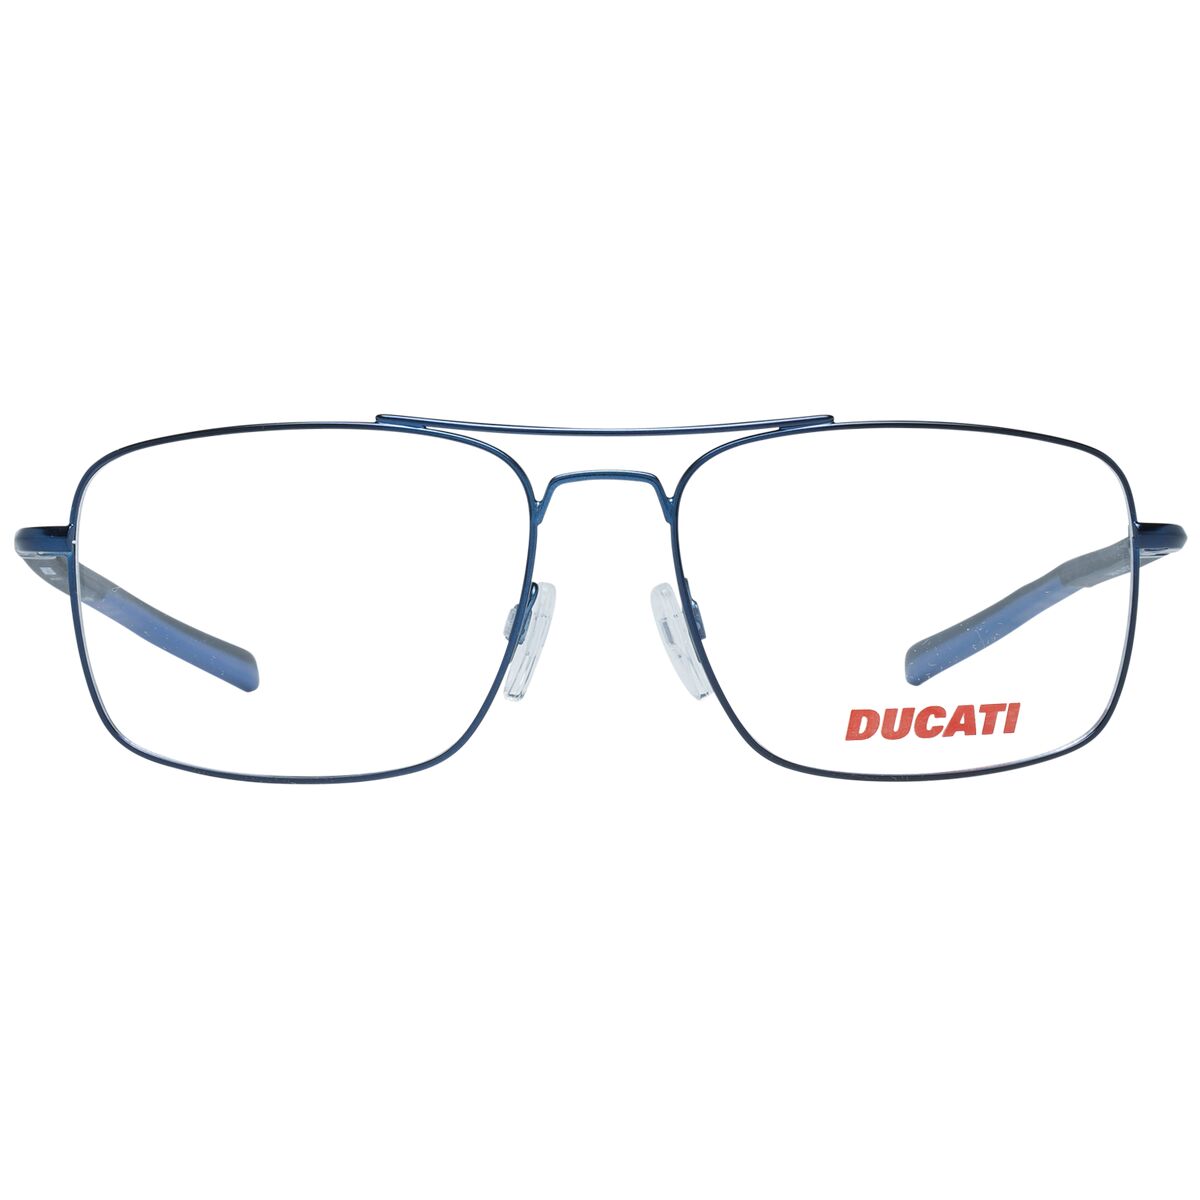 Kaufe Brillenfassung Ducati DA3001 57600 bei AWK Flagship um € 67.00